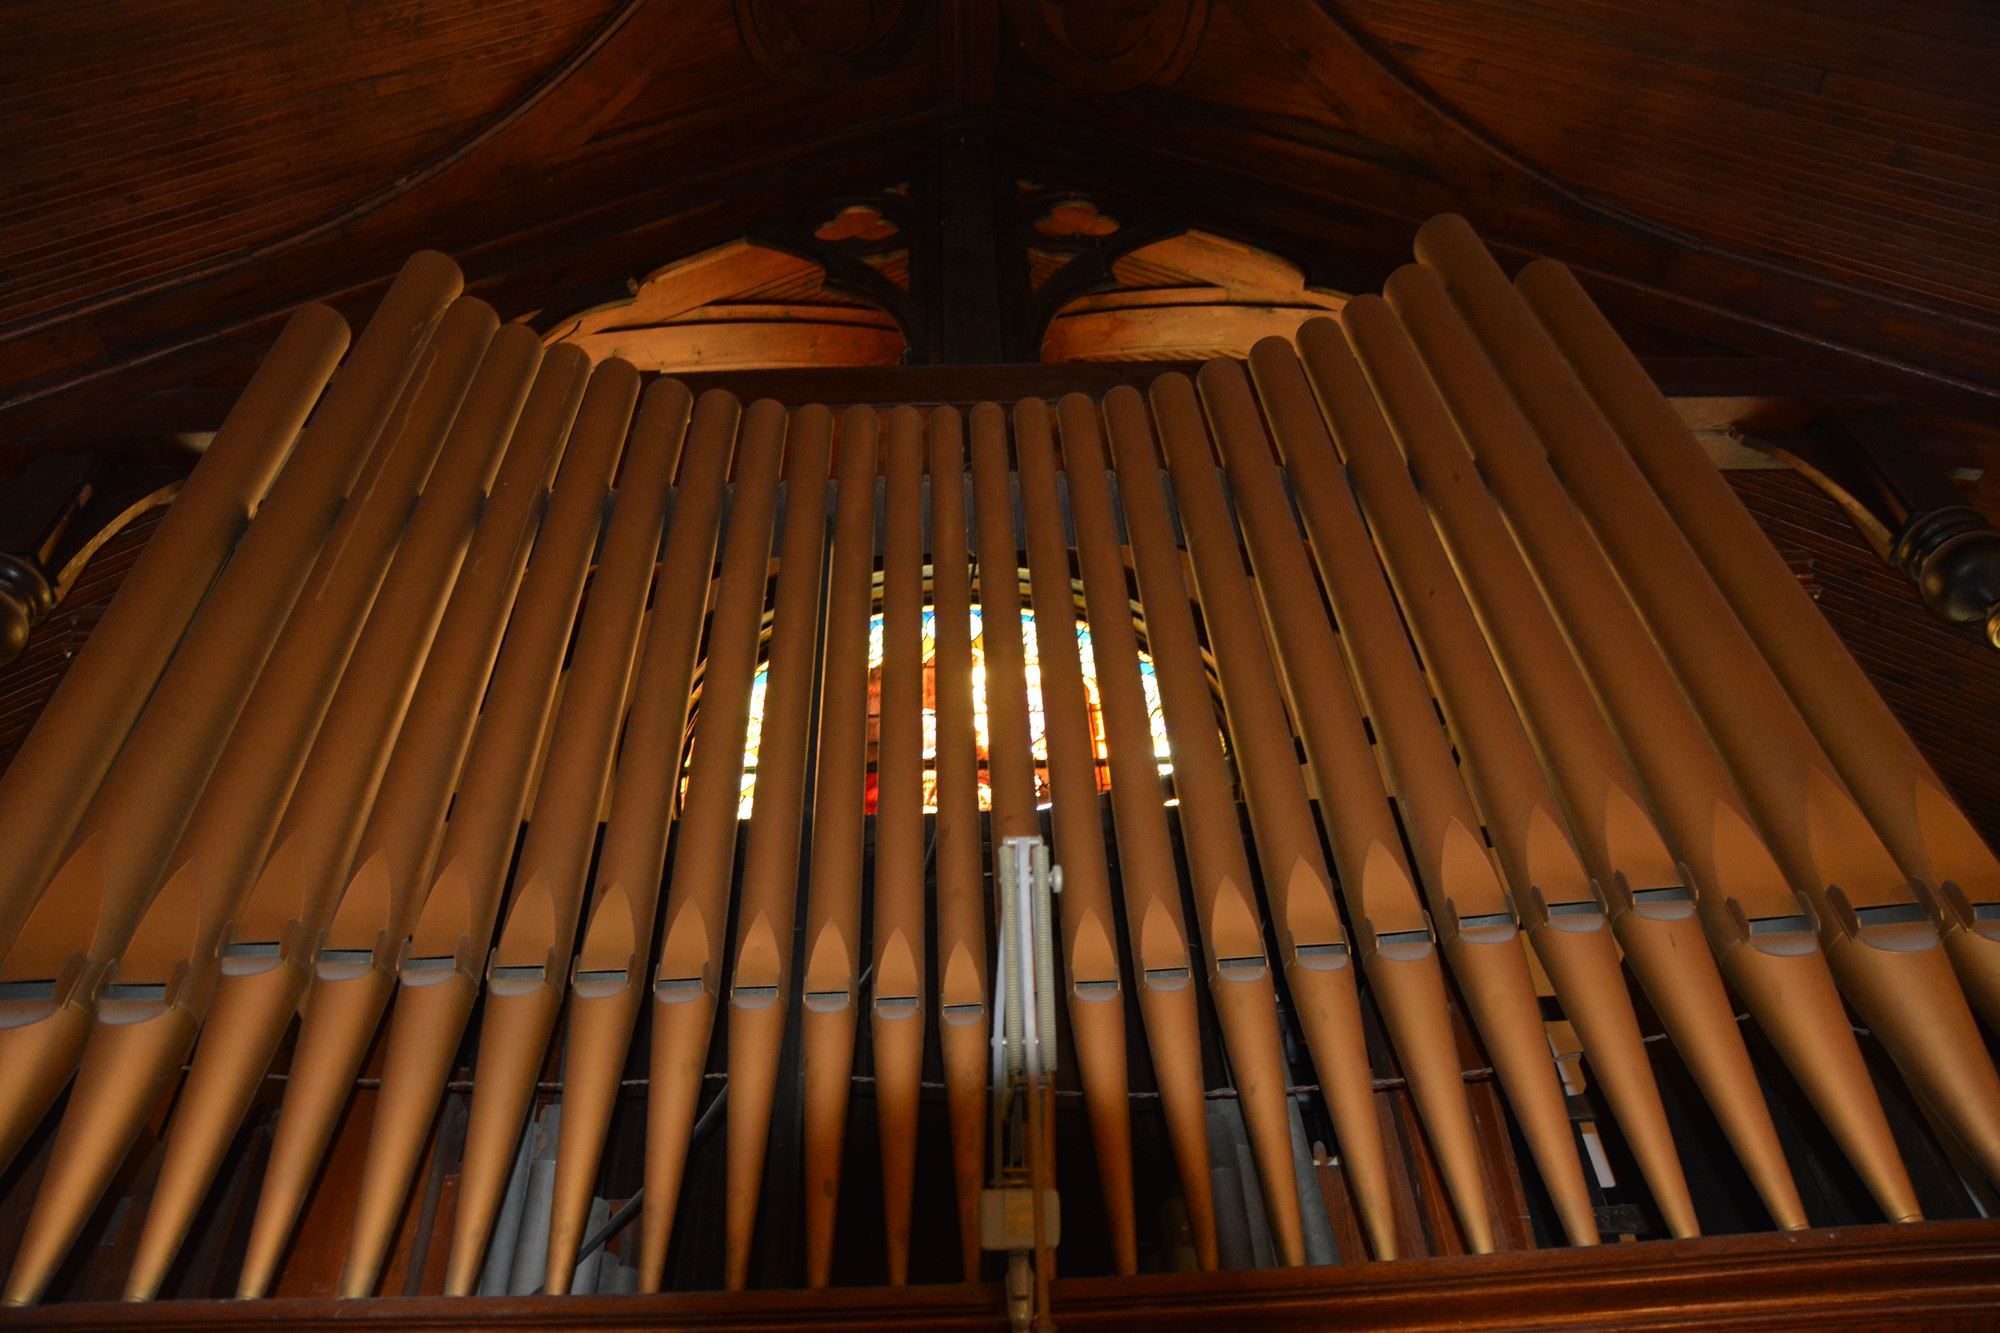 Pilcher Pipe Organ